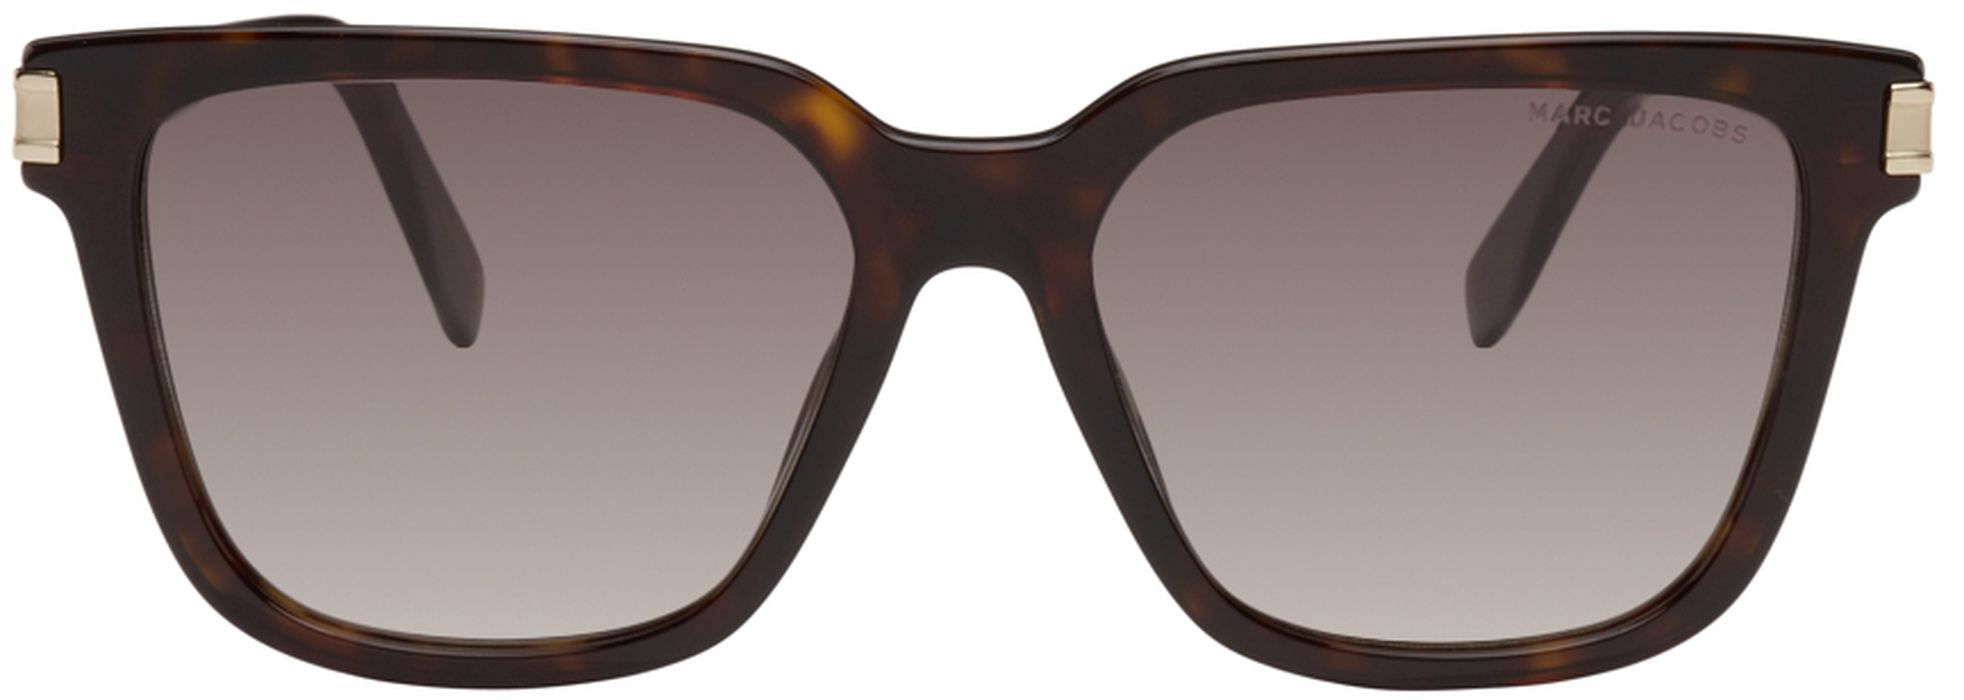 Marc Jacobs Tortoiseshell Cat-Eye Sunglasses